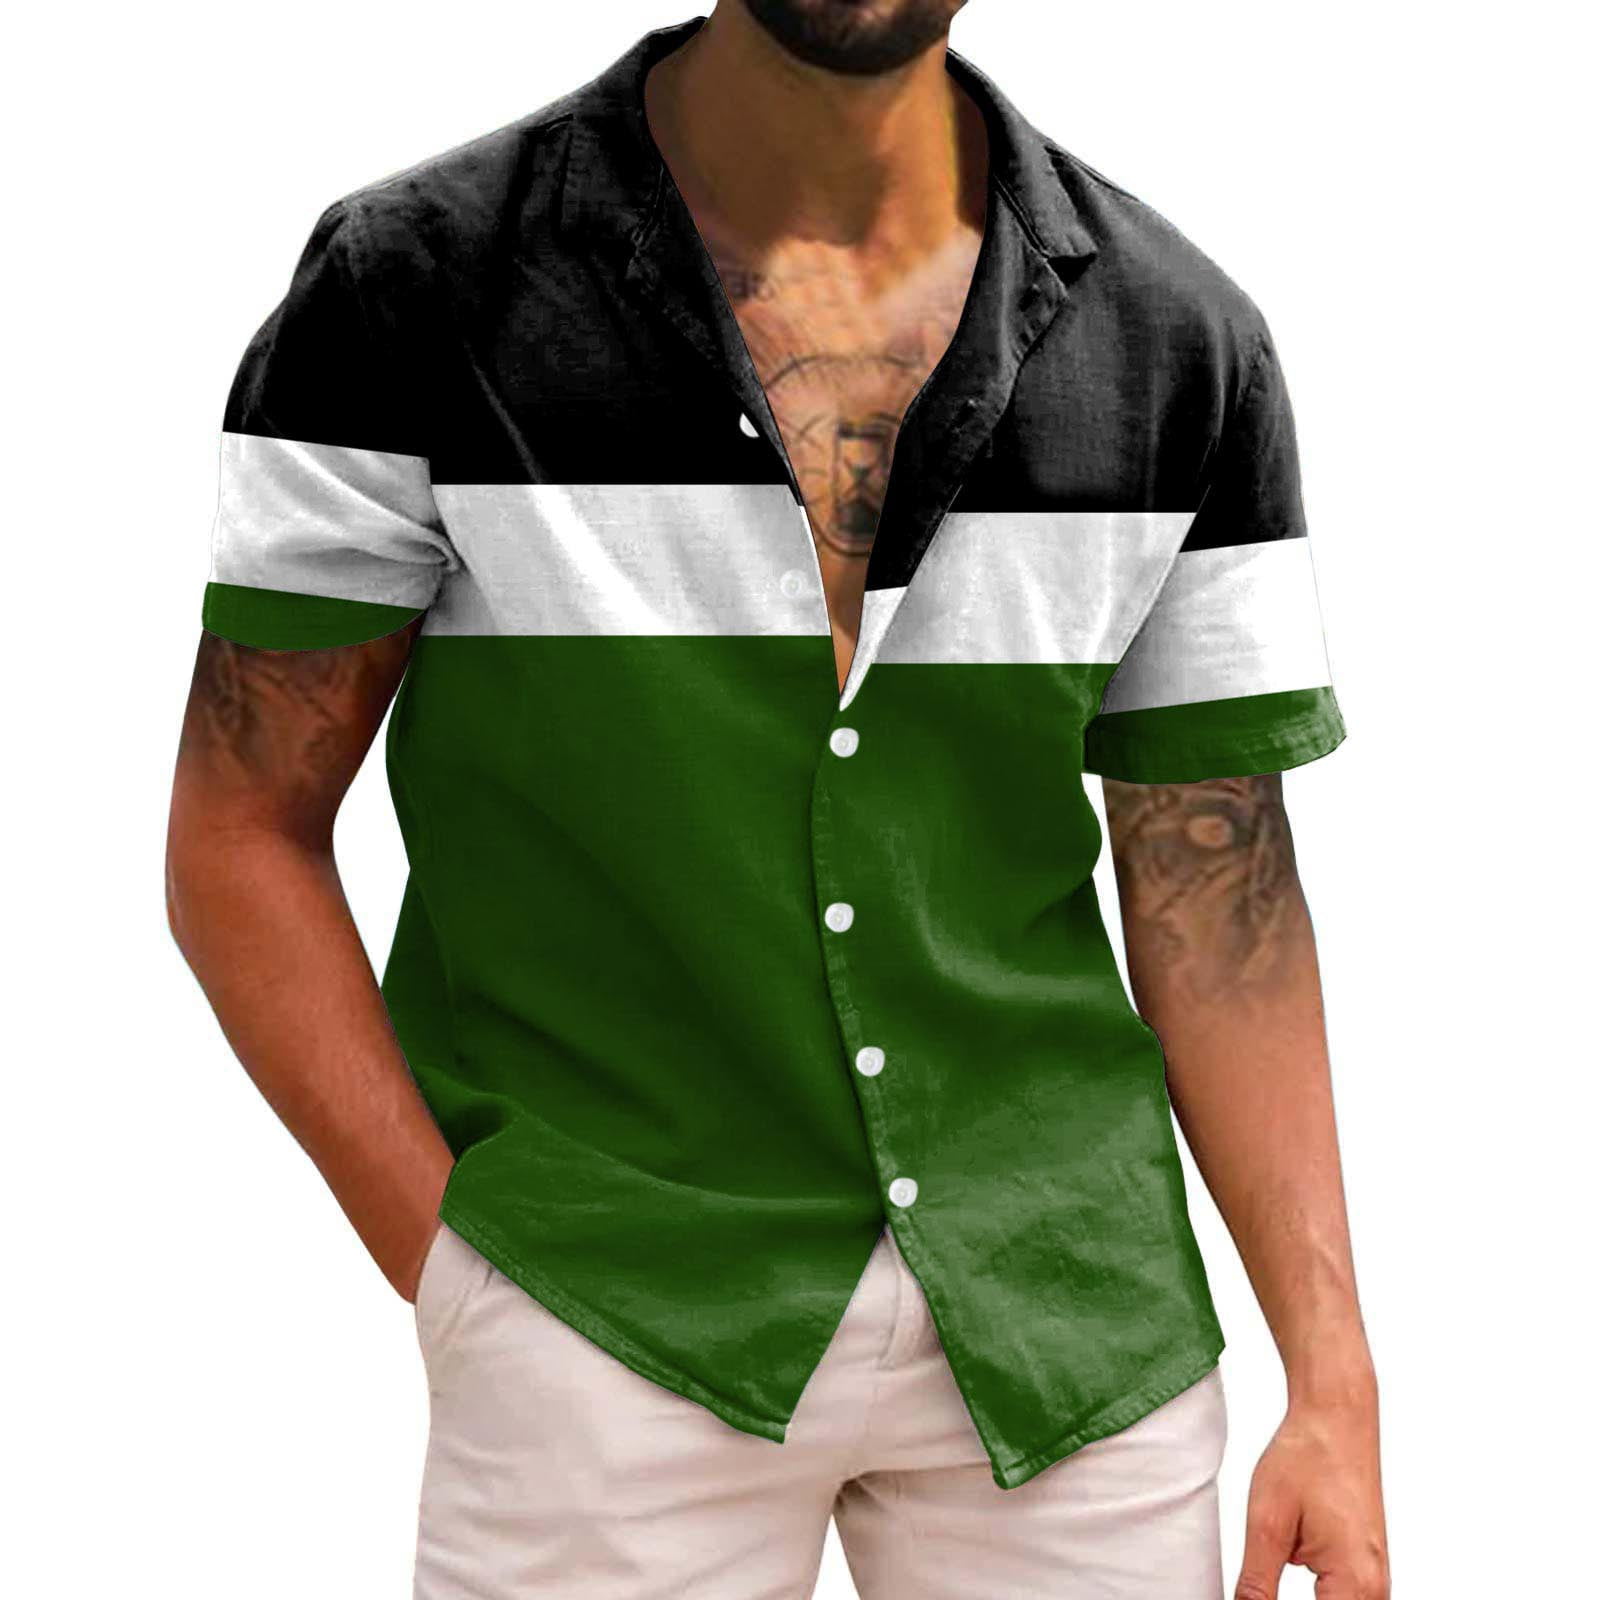 Pedort Shirts For Men With Designs Golf Shirts for Men Regular and Big ...